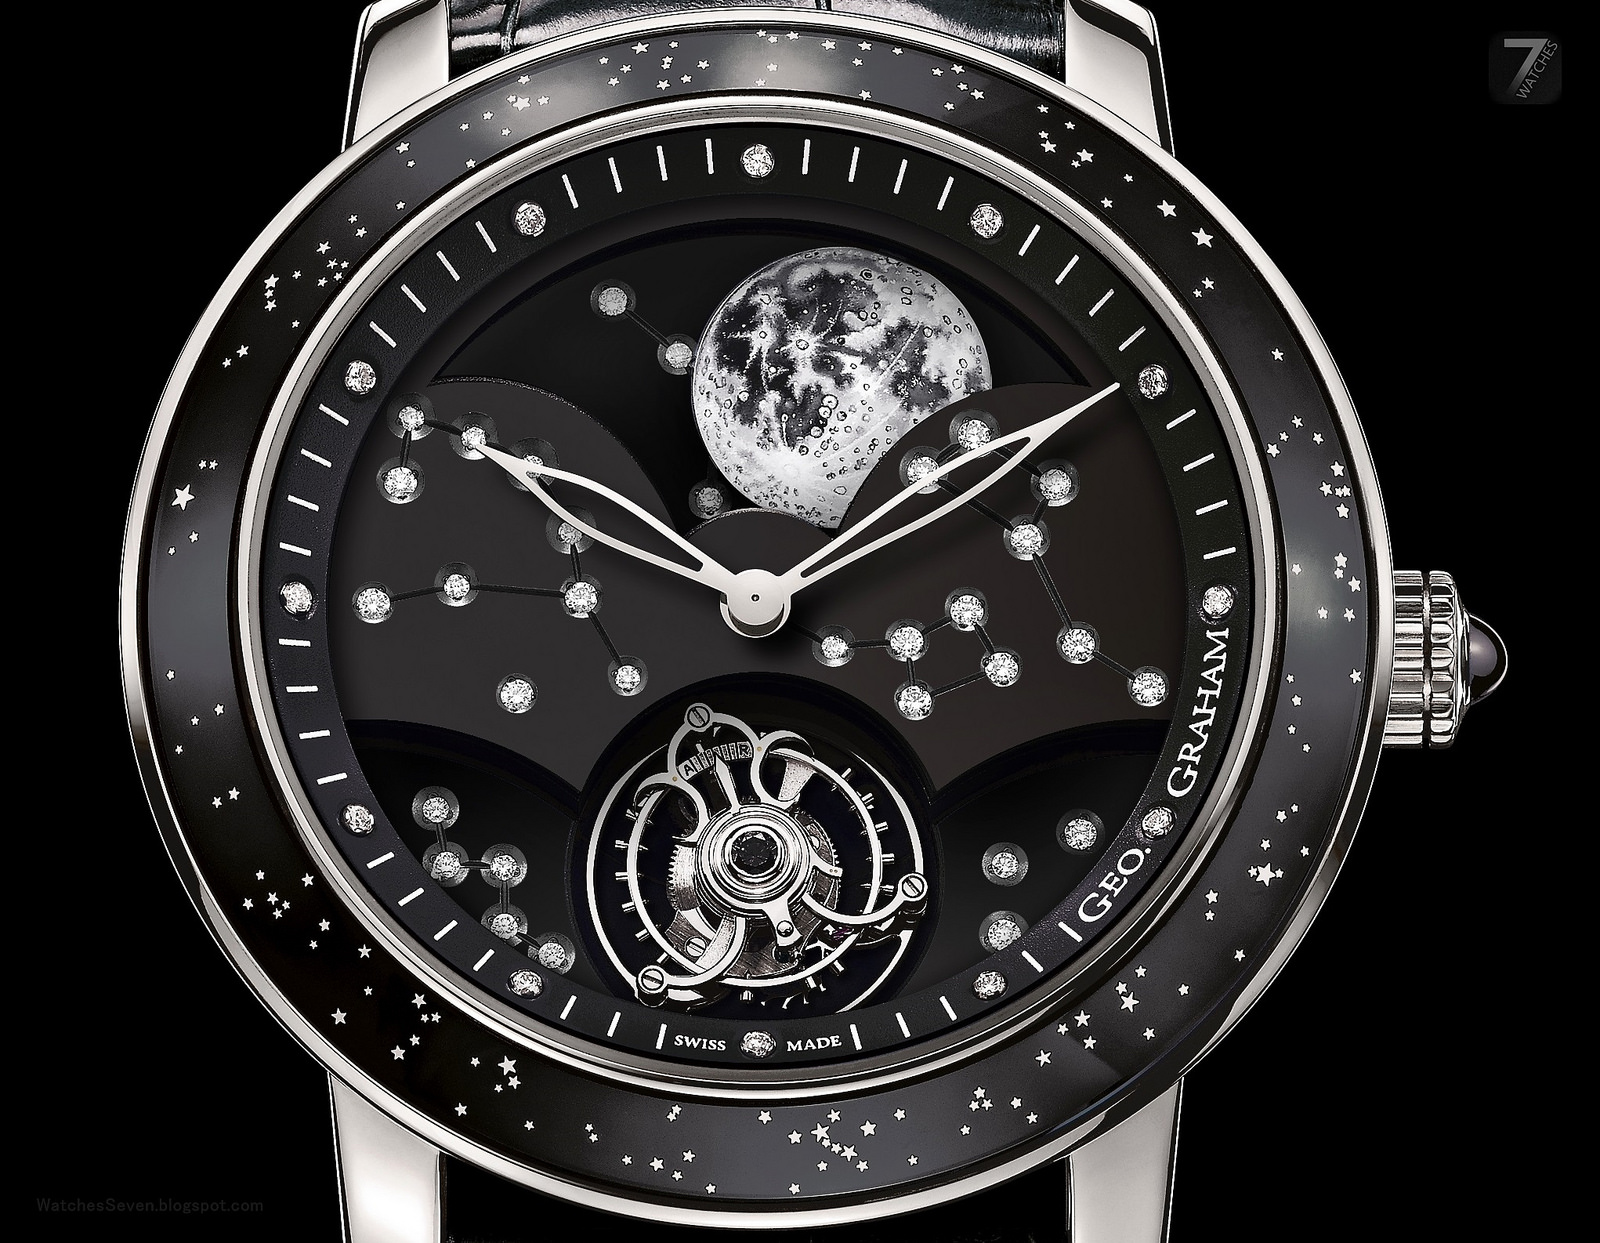 Unique watches. Часы Луна наручные. Graham часы. Часы Moonlight. Часы мужские с луной.